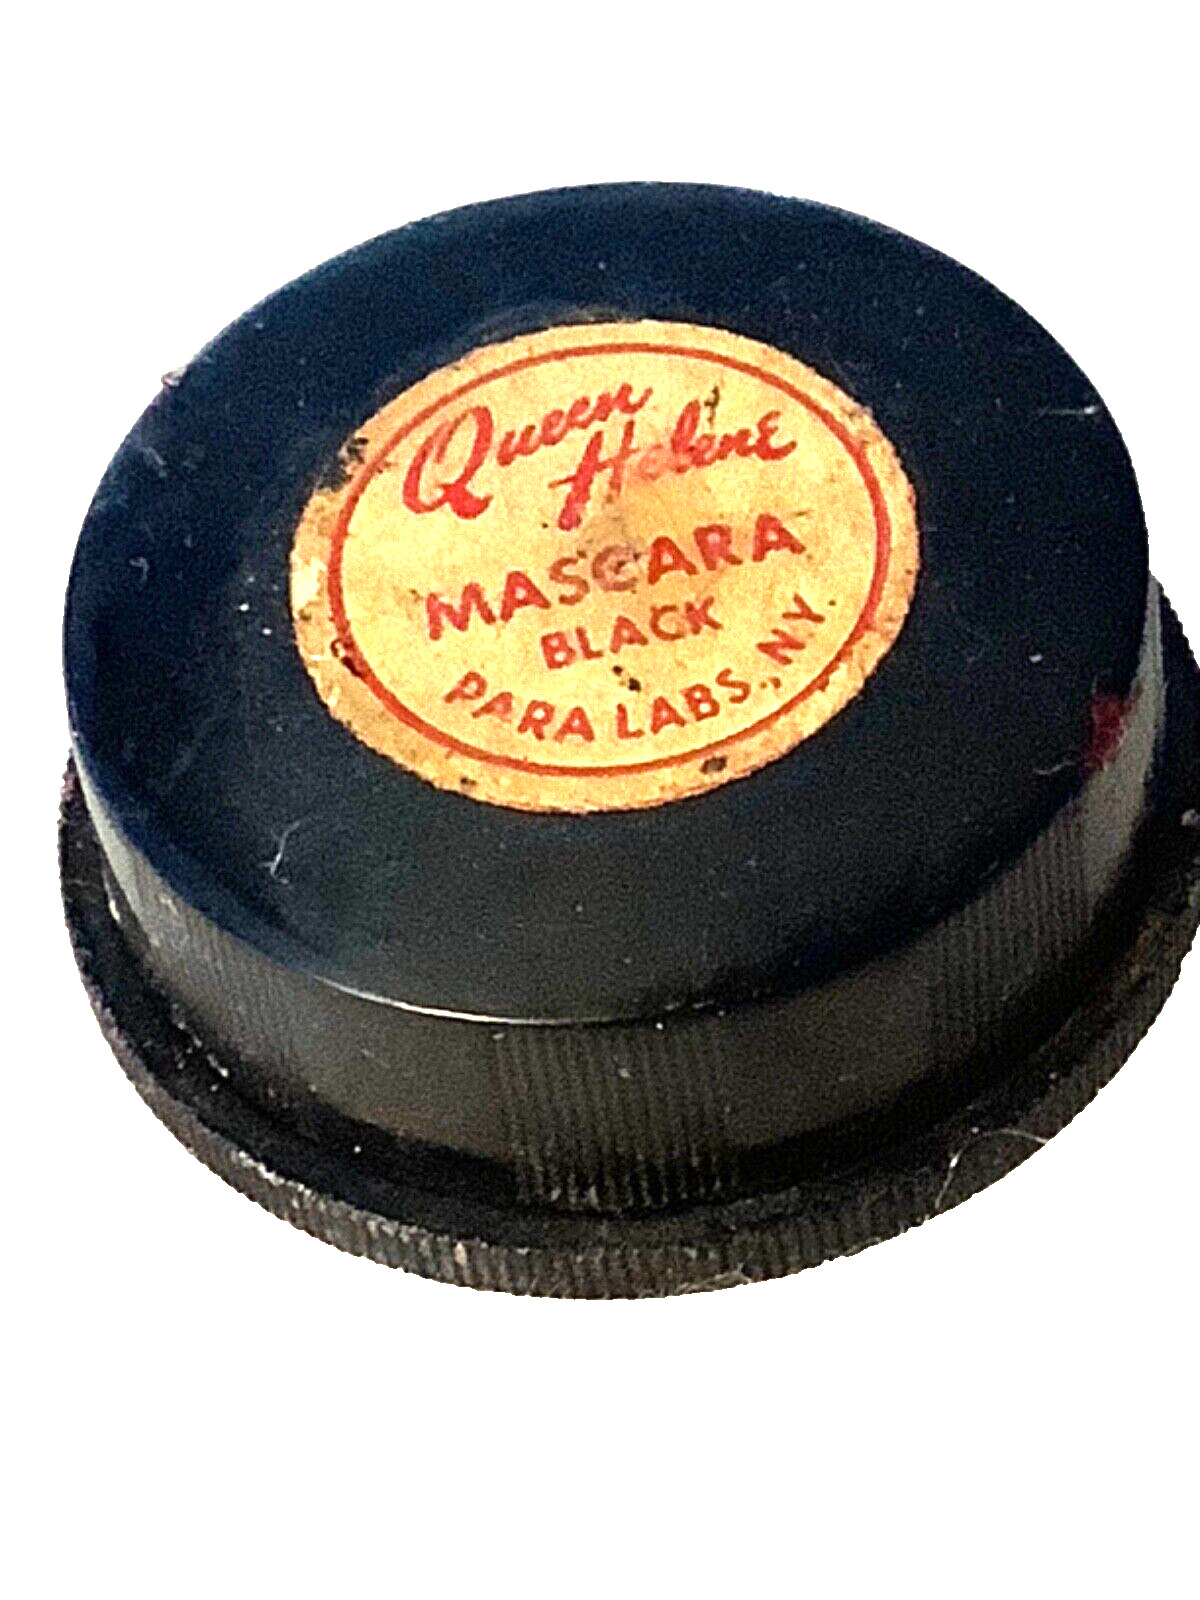 💋 1950s Queen Helene Cake Mascara Para Labs NY Cosmetic Vintage 💋ULTRA RARE 